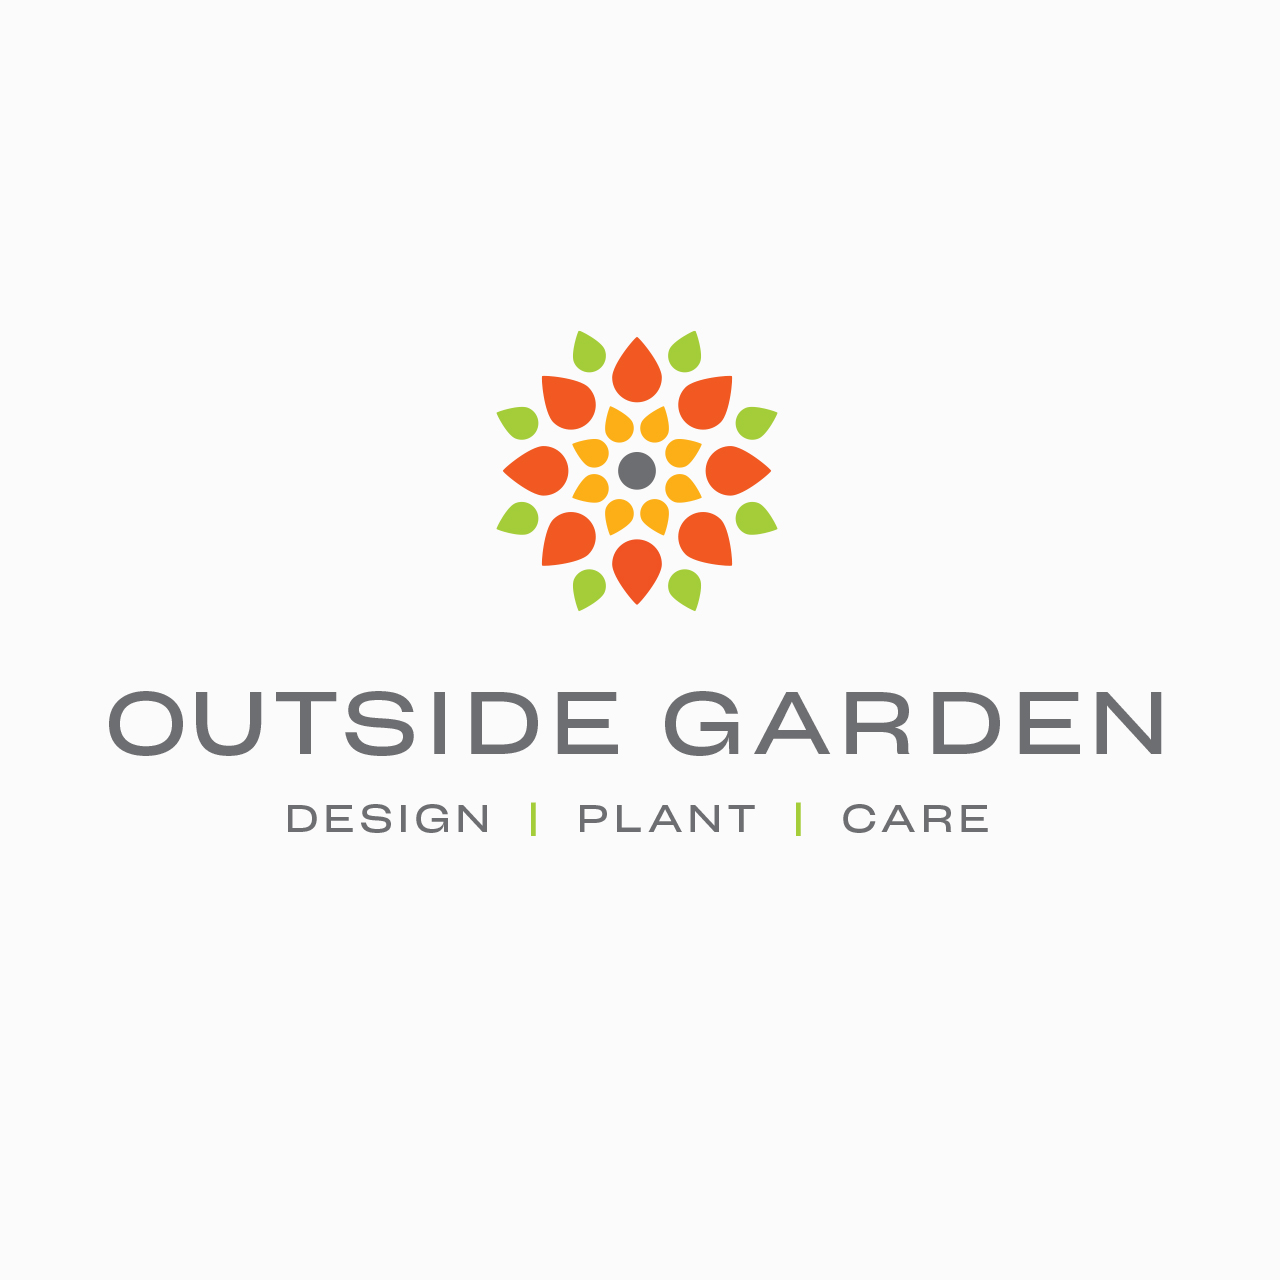 Logo design and type treatment for Outside Garden Landscape Design